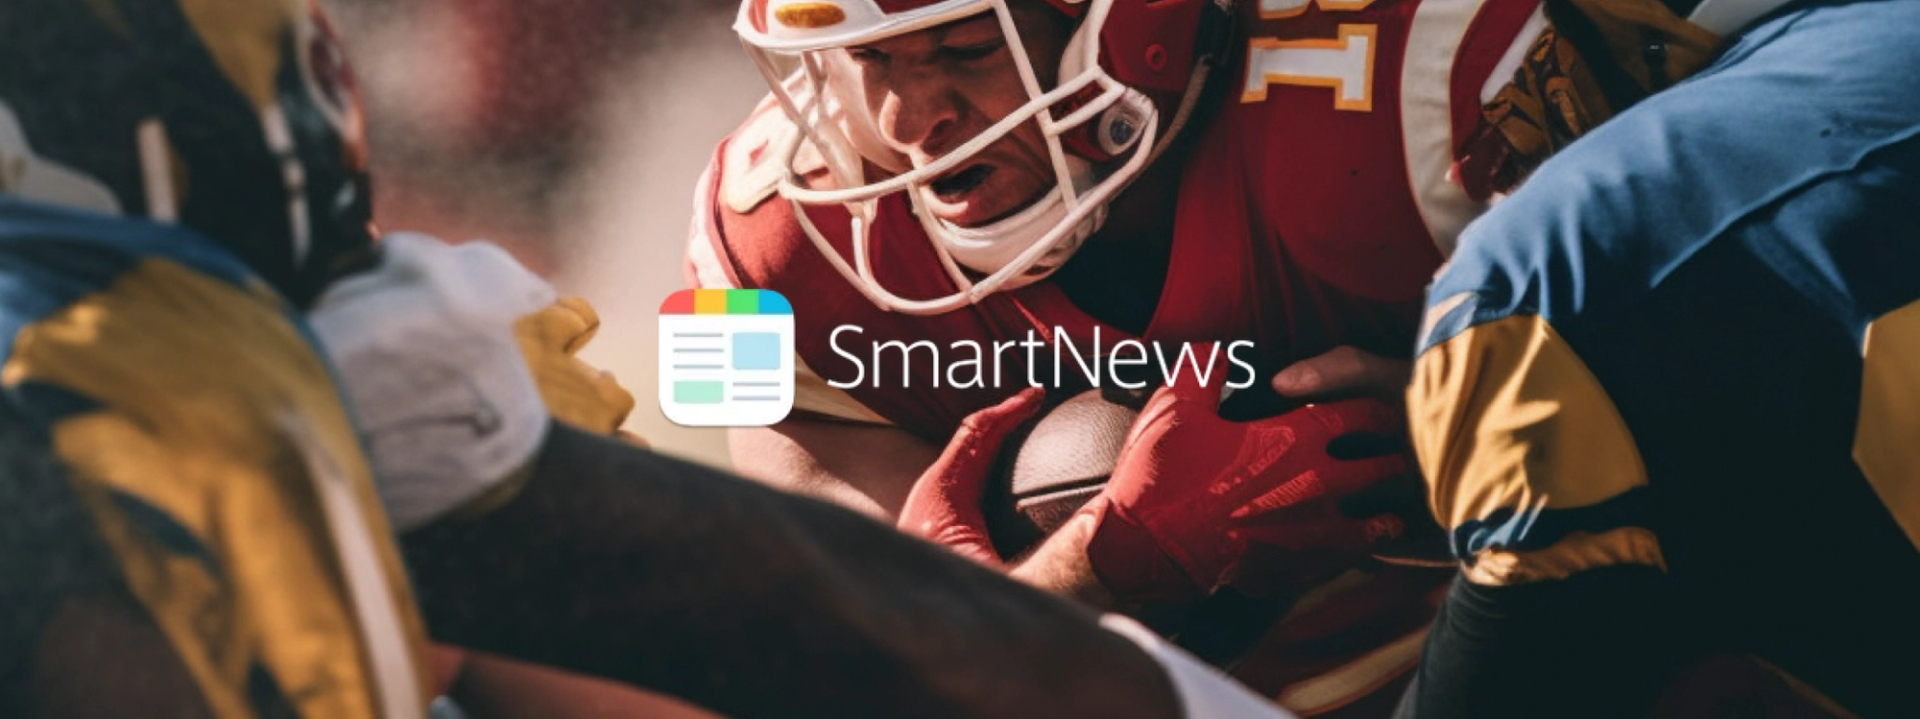 AI-Driven Sports Images Transform SmartNews Campaign